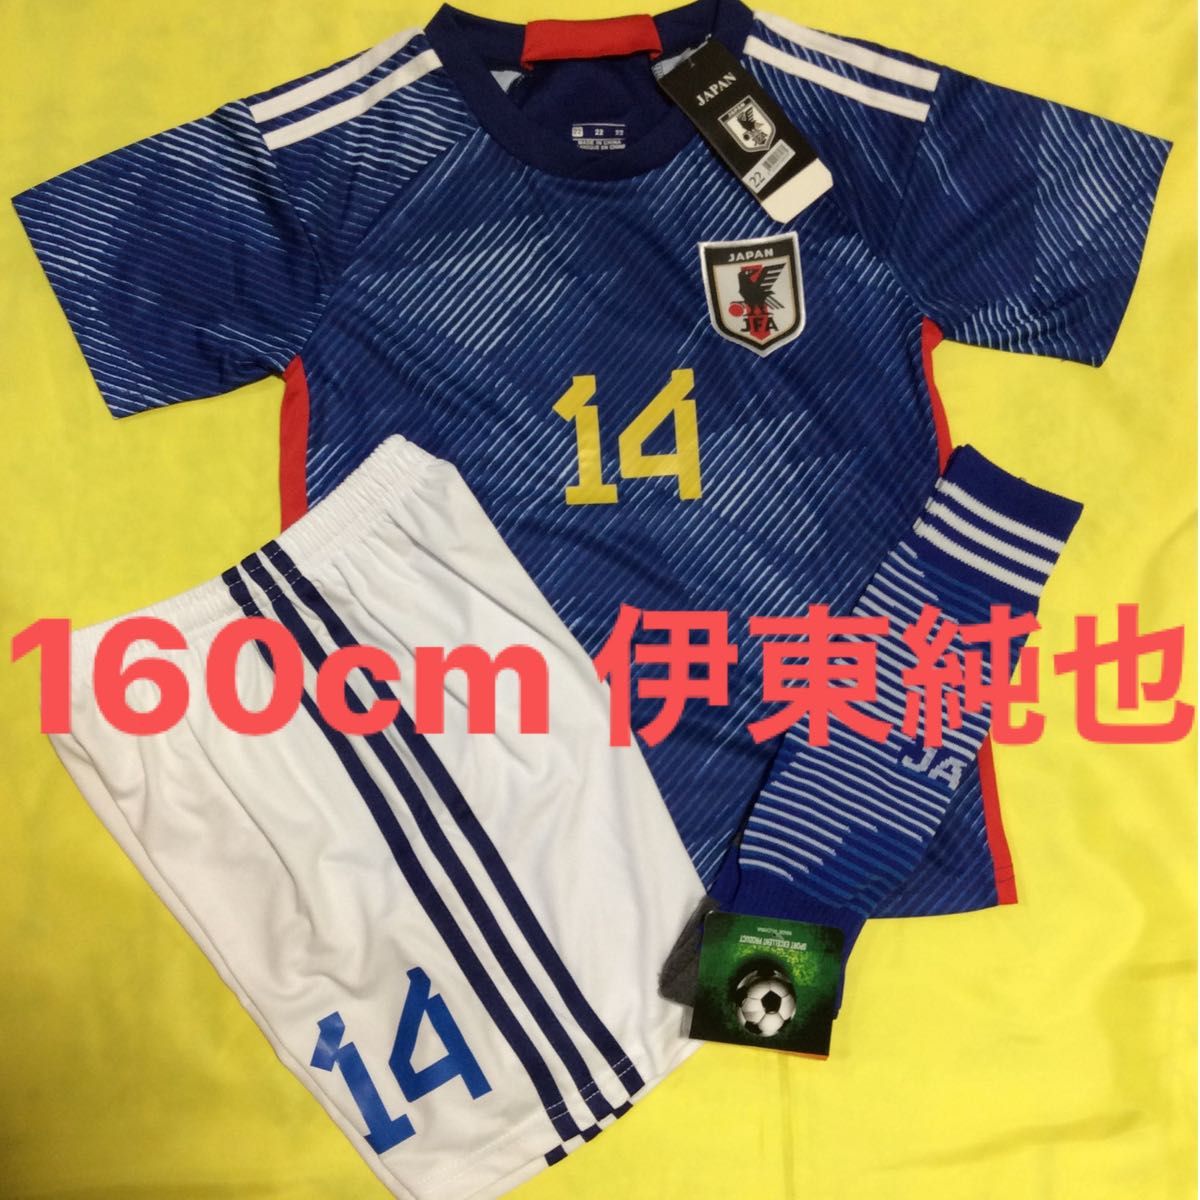 160cm 日本代表 伊東純也 子供サッカーユニフォーム ソックスセット キッズ